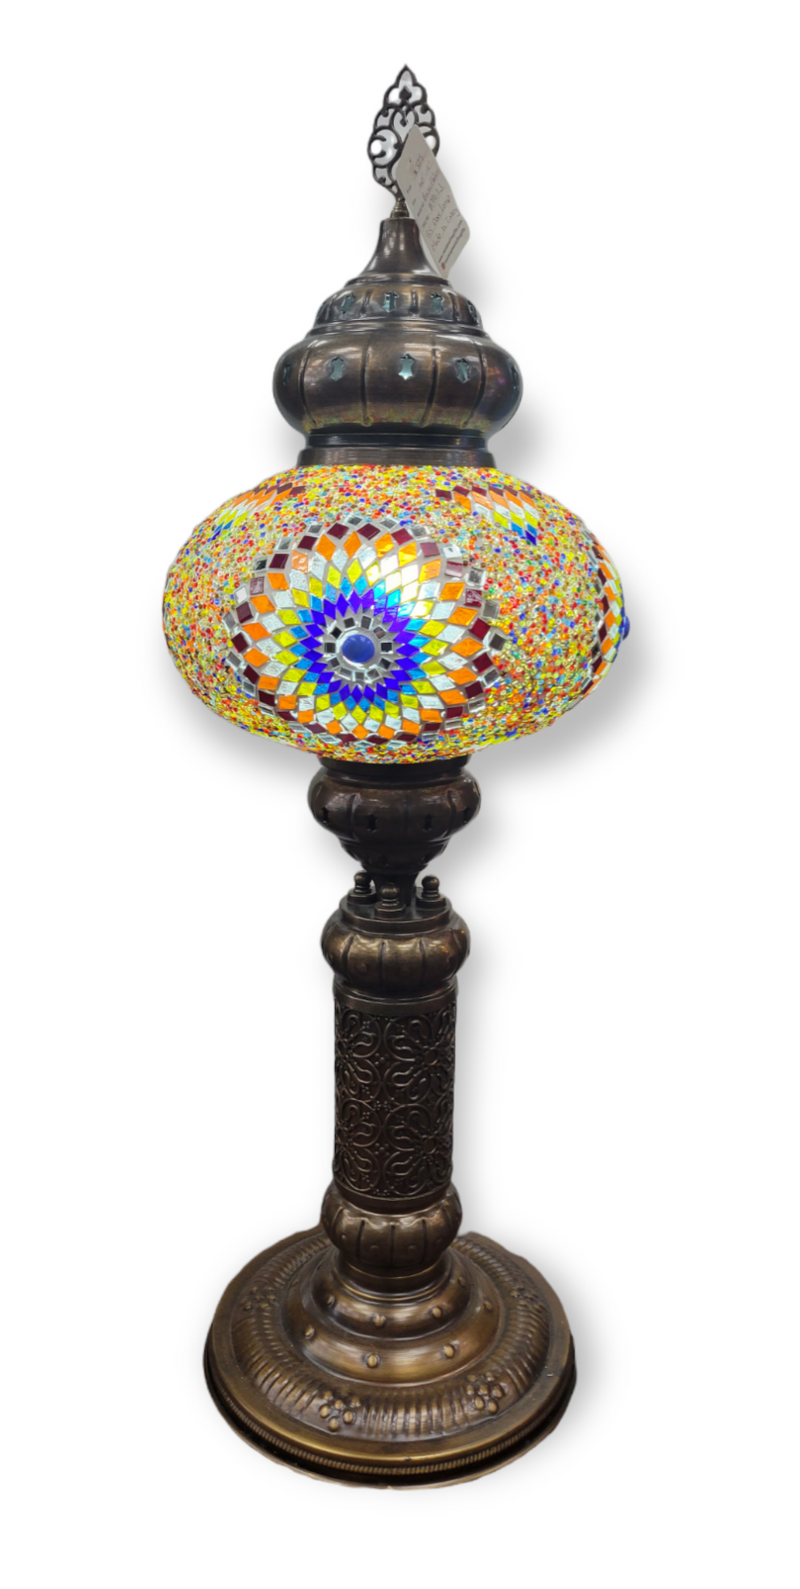 Mosaic floor lamp